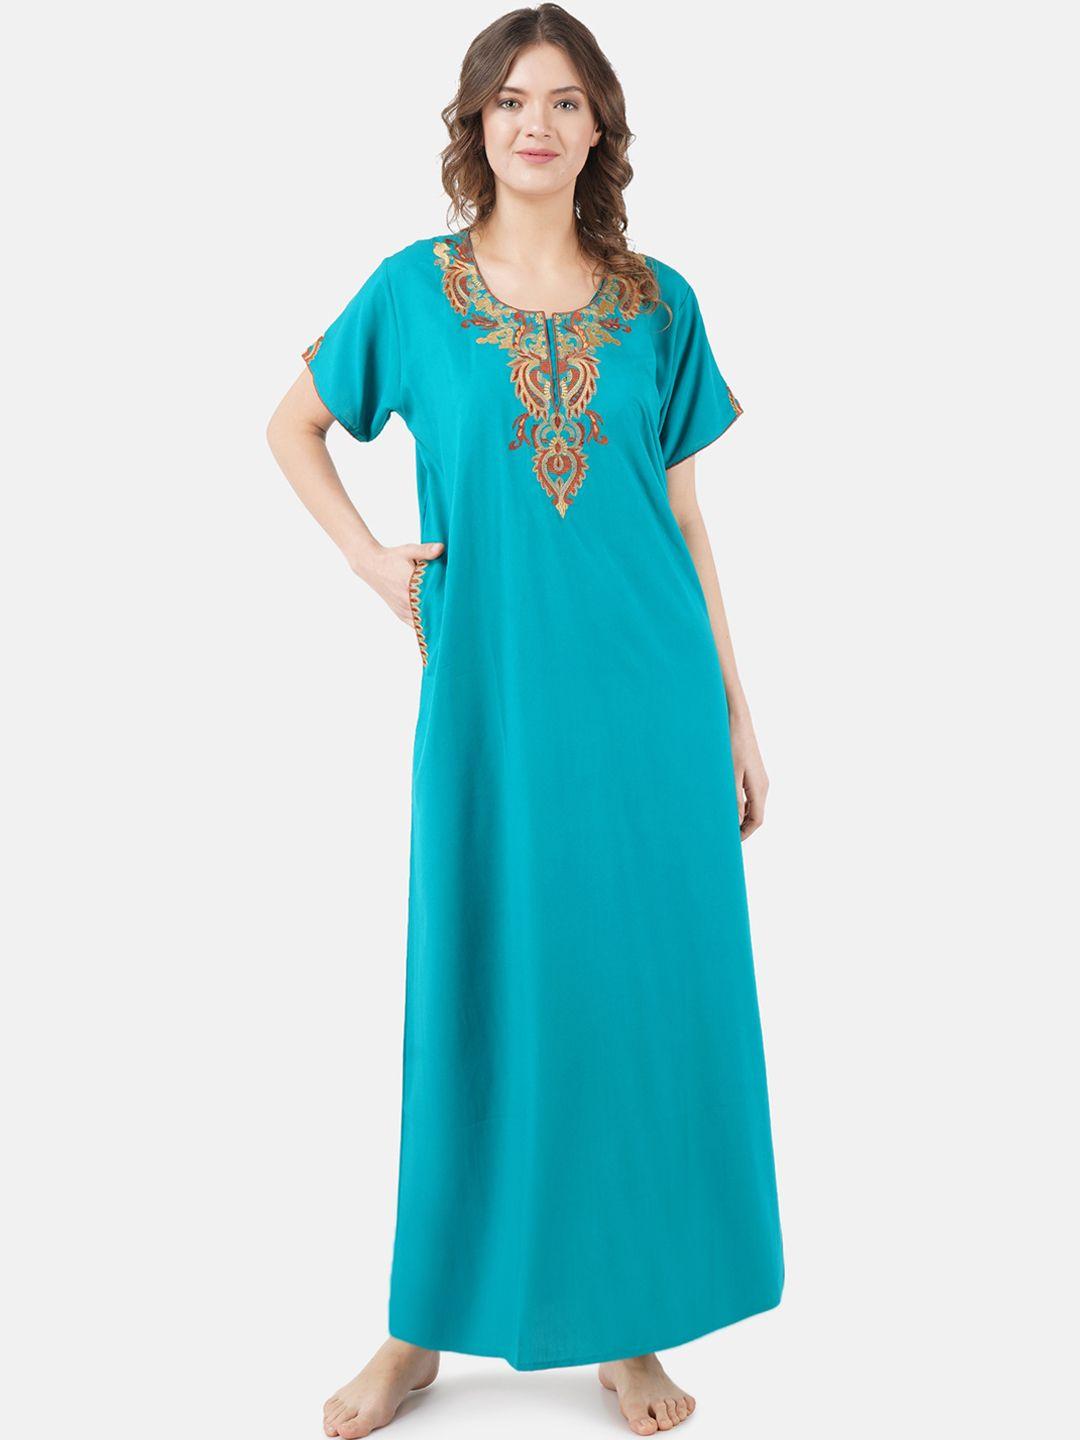 koi sleepwear turquoise blue lissybissy cotton embroidered maxi nightdress